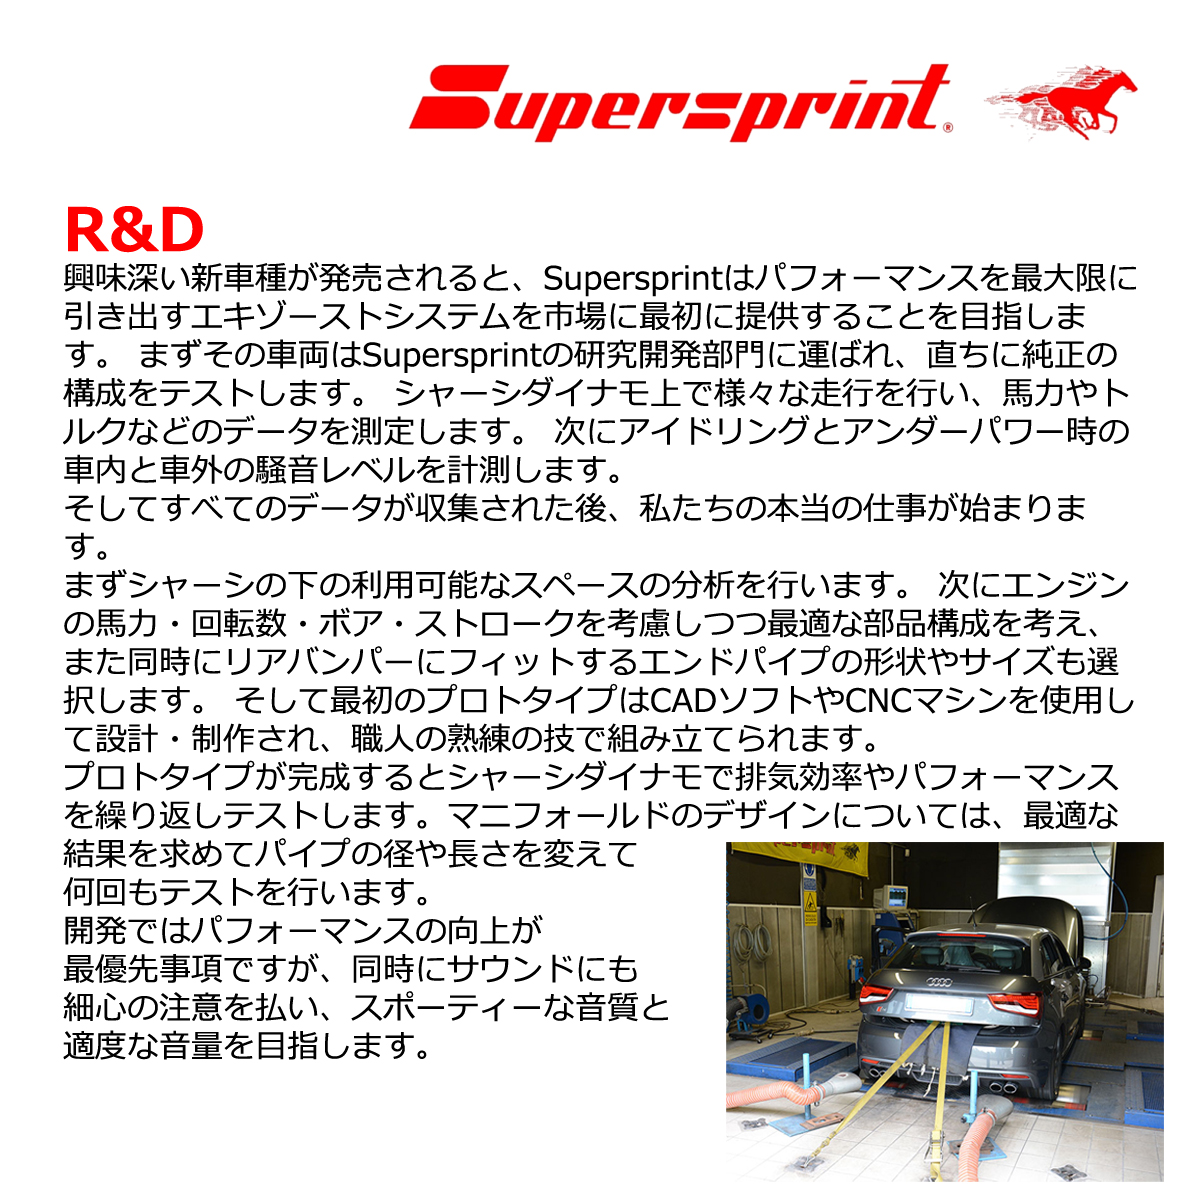 Supersprint リアマフラー BMW E31 850i ○○-○○76mm